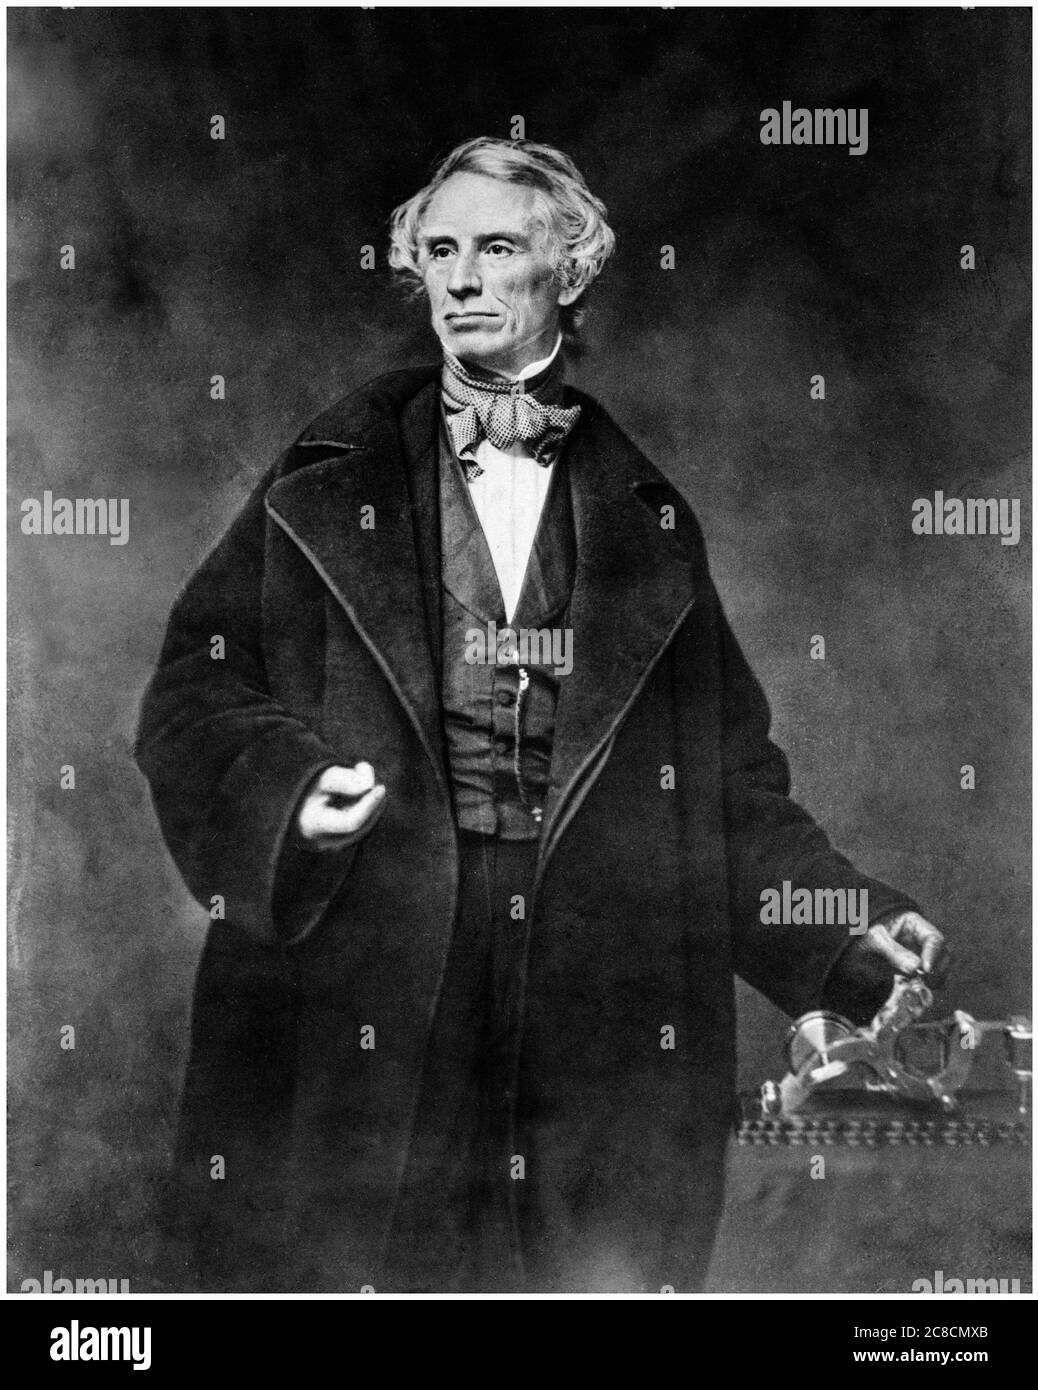 Samuel Finley Breese Morse (1791-1872), American inventor of Morse Code, pictured with single wire telegraph apparatus, portrait photograph by Mathew Brady Studio, circa 1850 Stock Photo